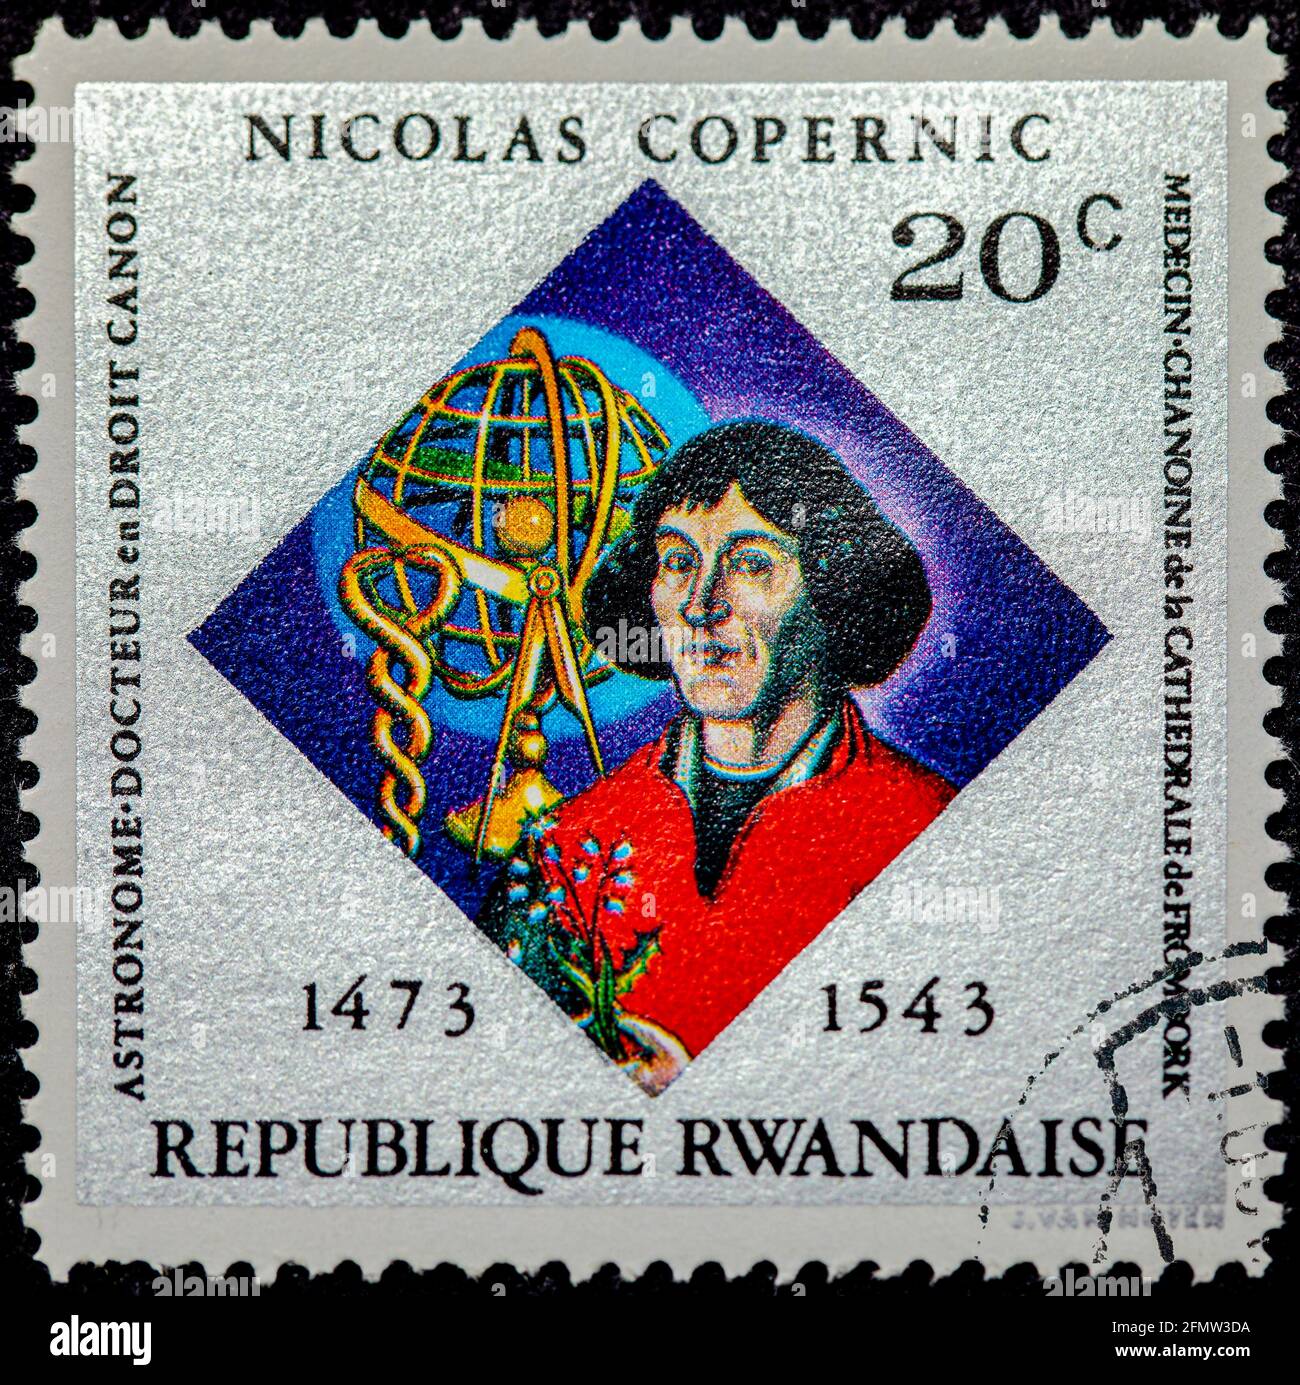 RWANDA - CIRCA 1973 : Cancelled stamp printed by Rwanda, that shows Nicolas Copernicus. Stock Photo